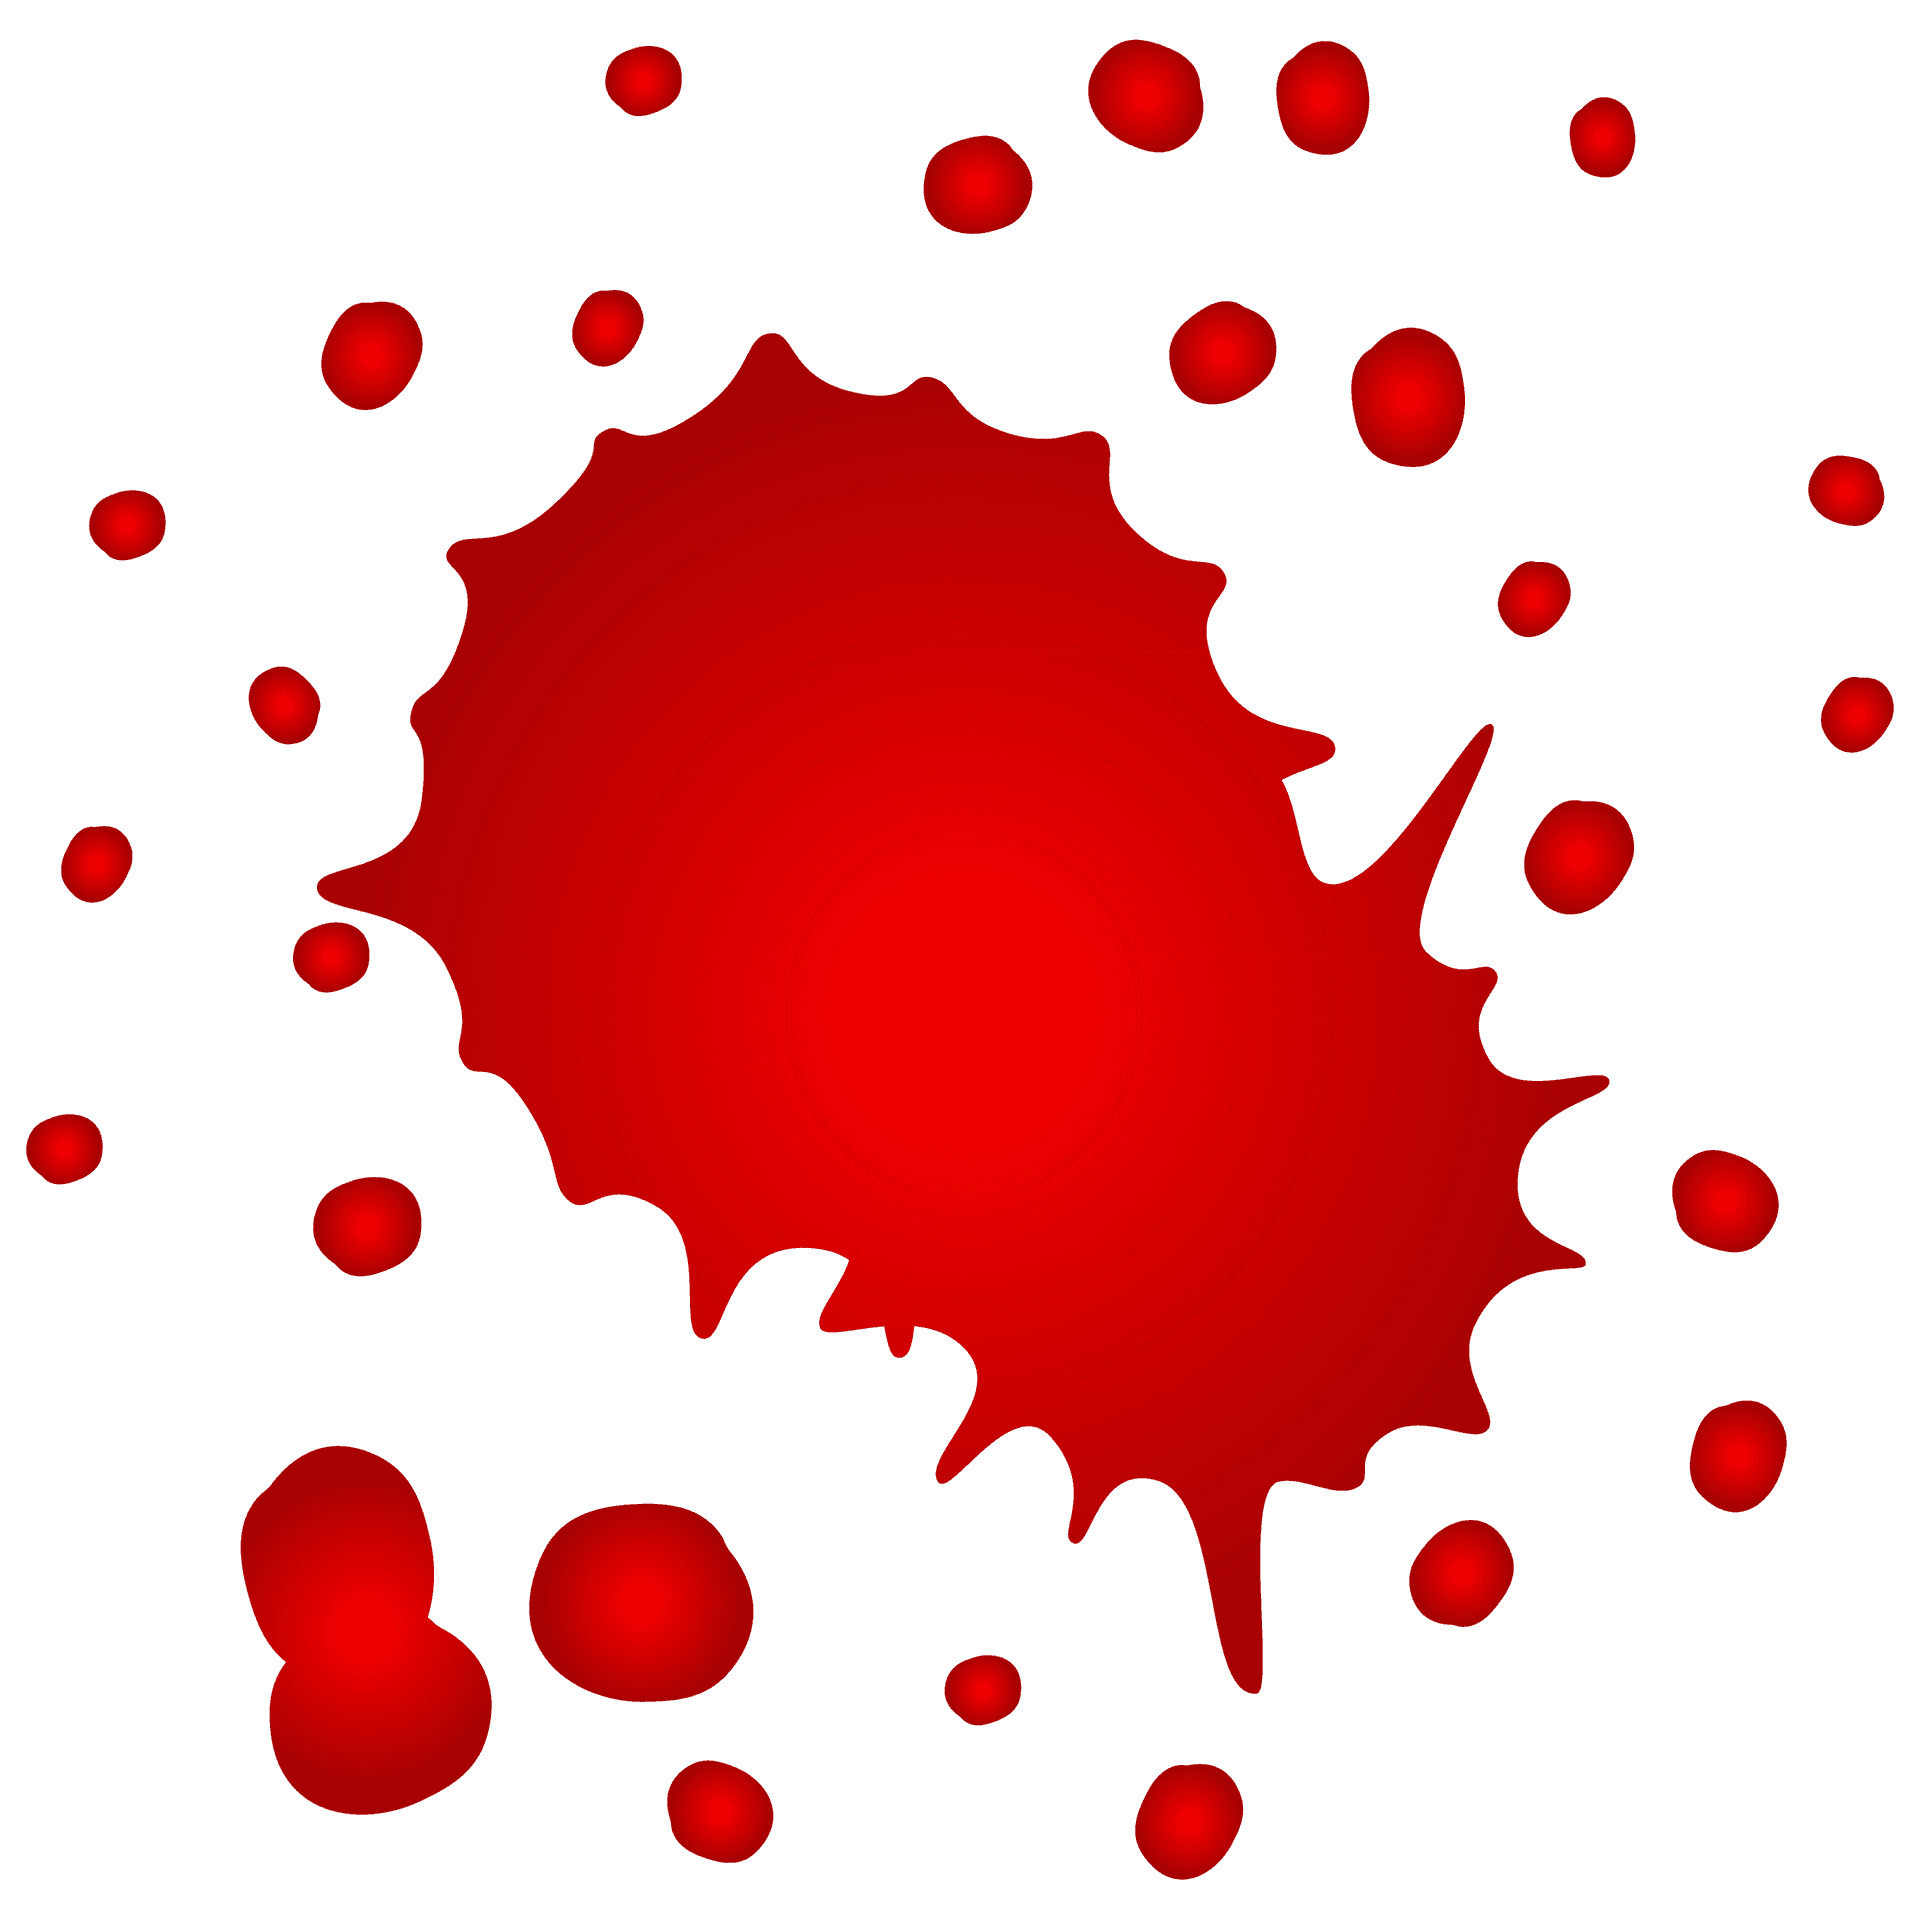 Red Blood Splatter Graphic PNG